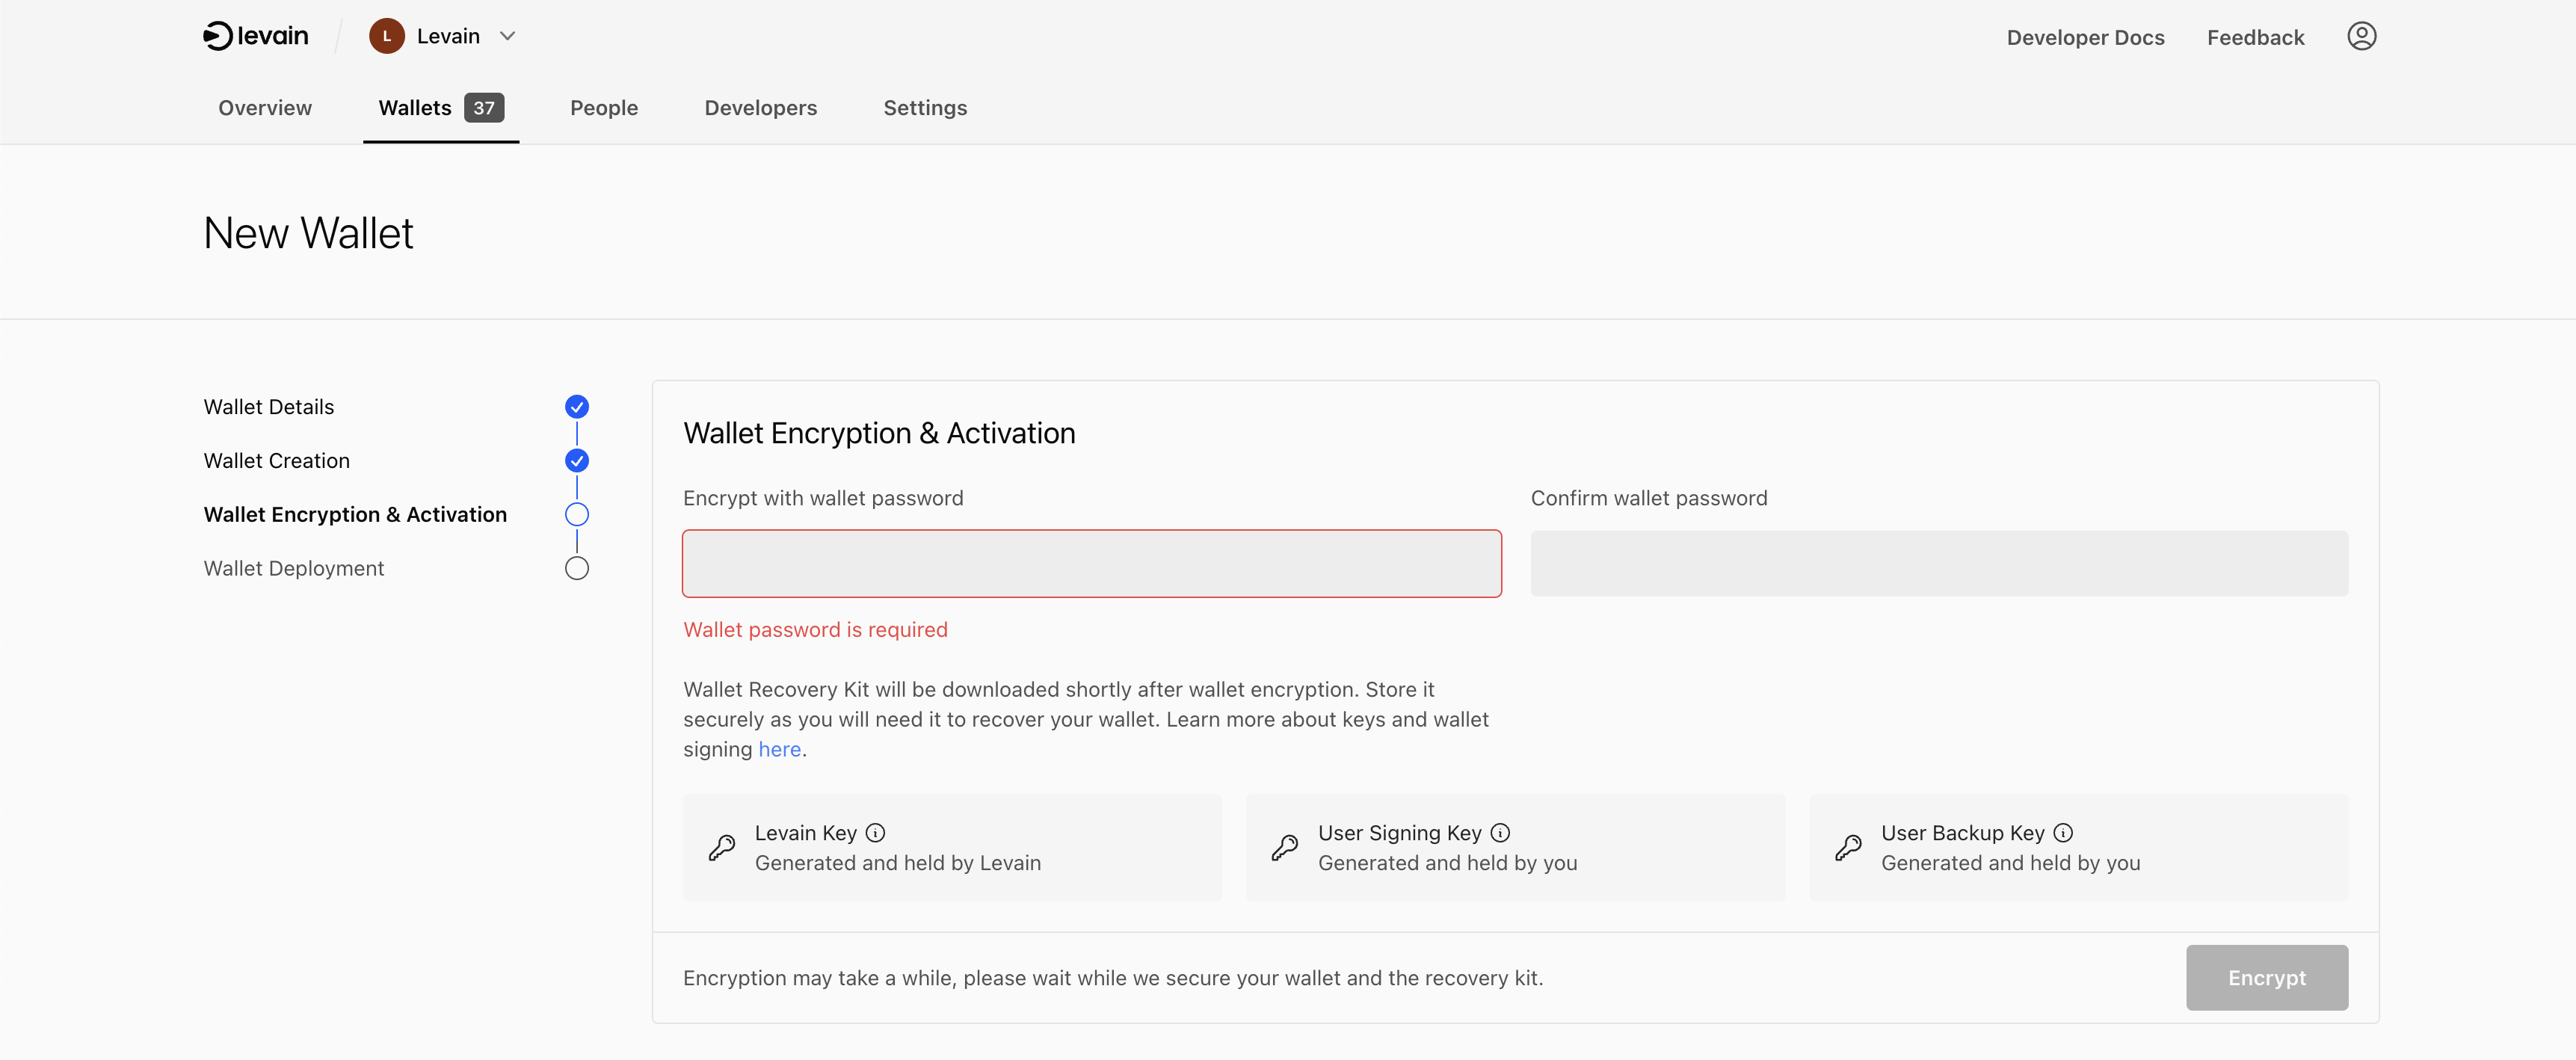 Encrypt wallet password step